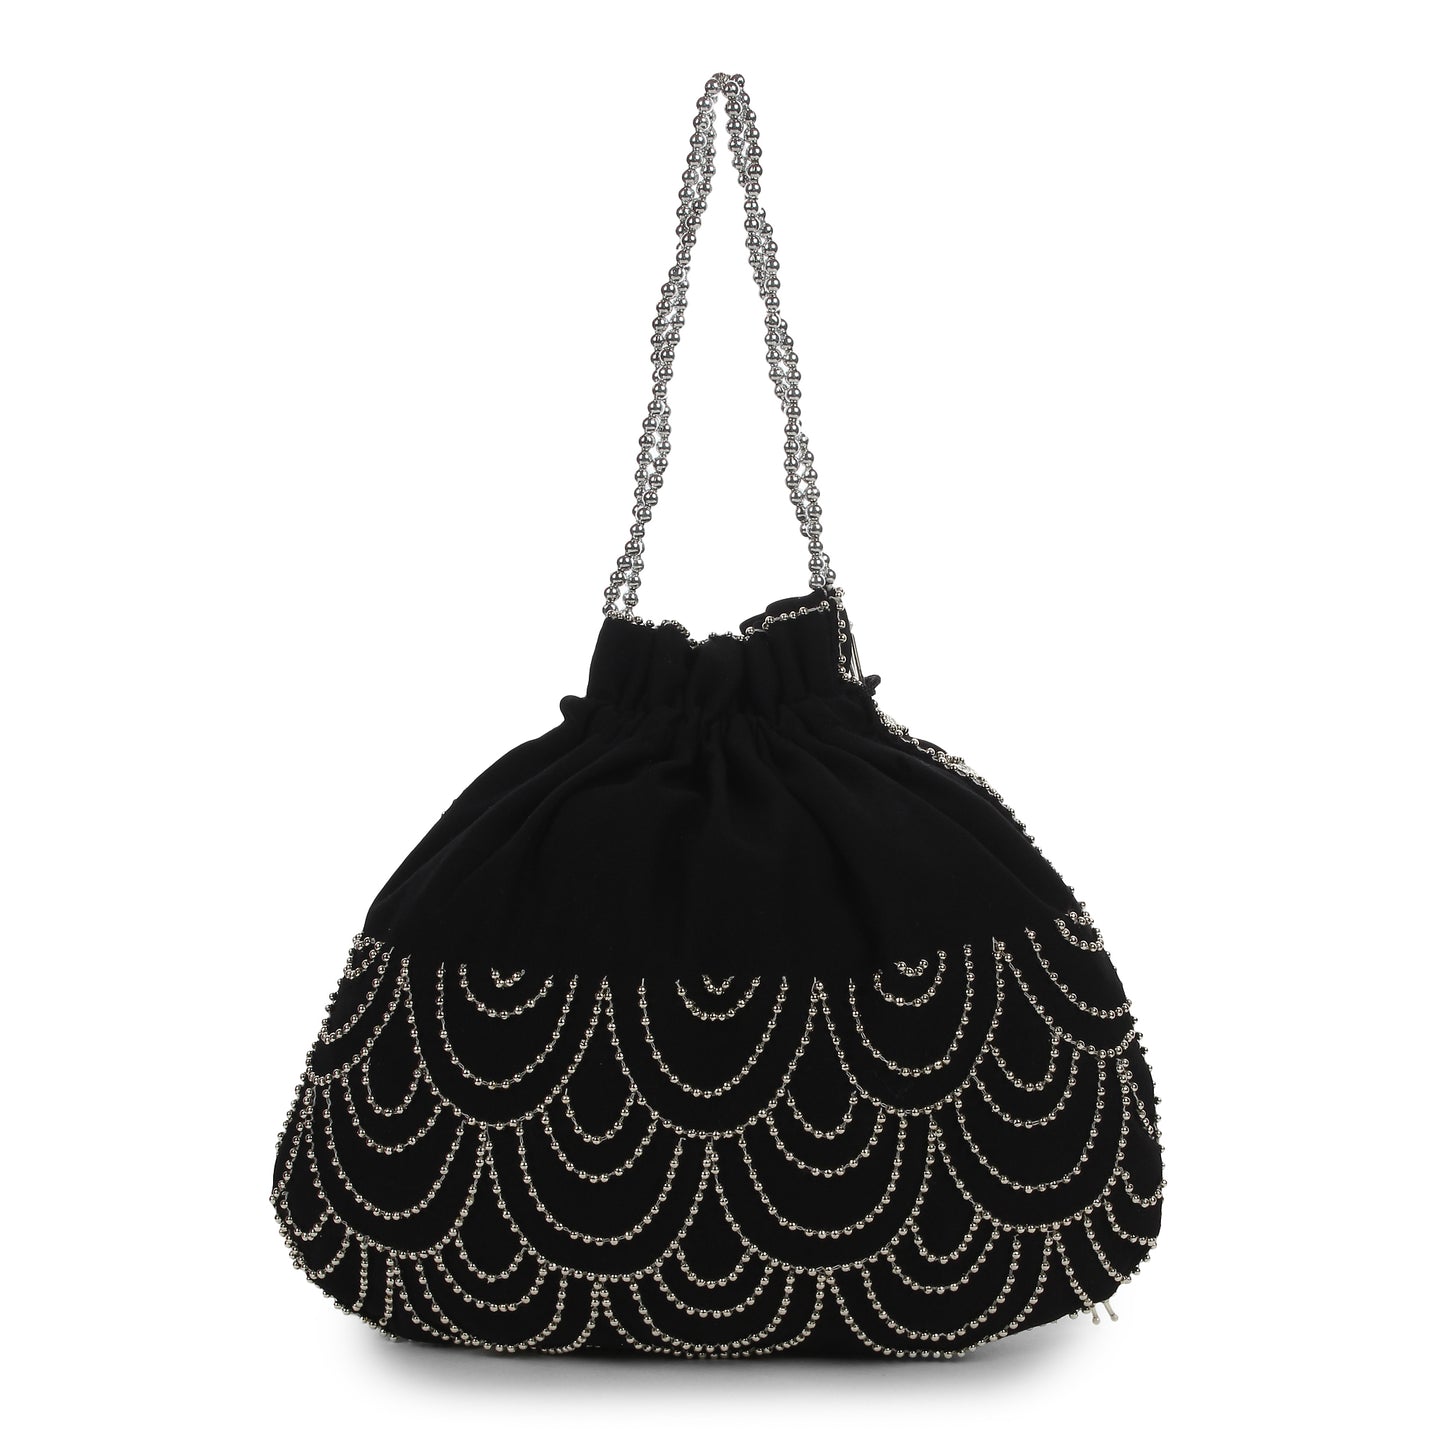  ladies bag online, black purse online 